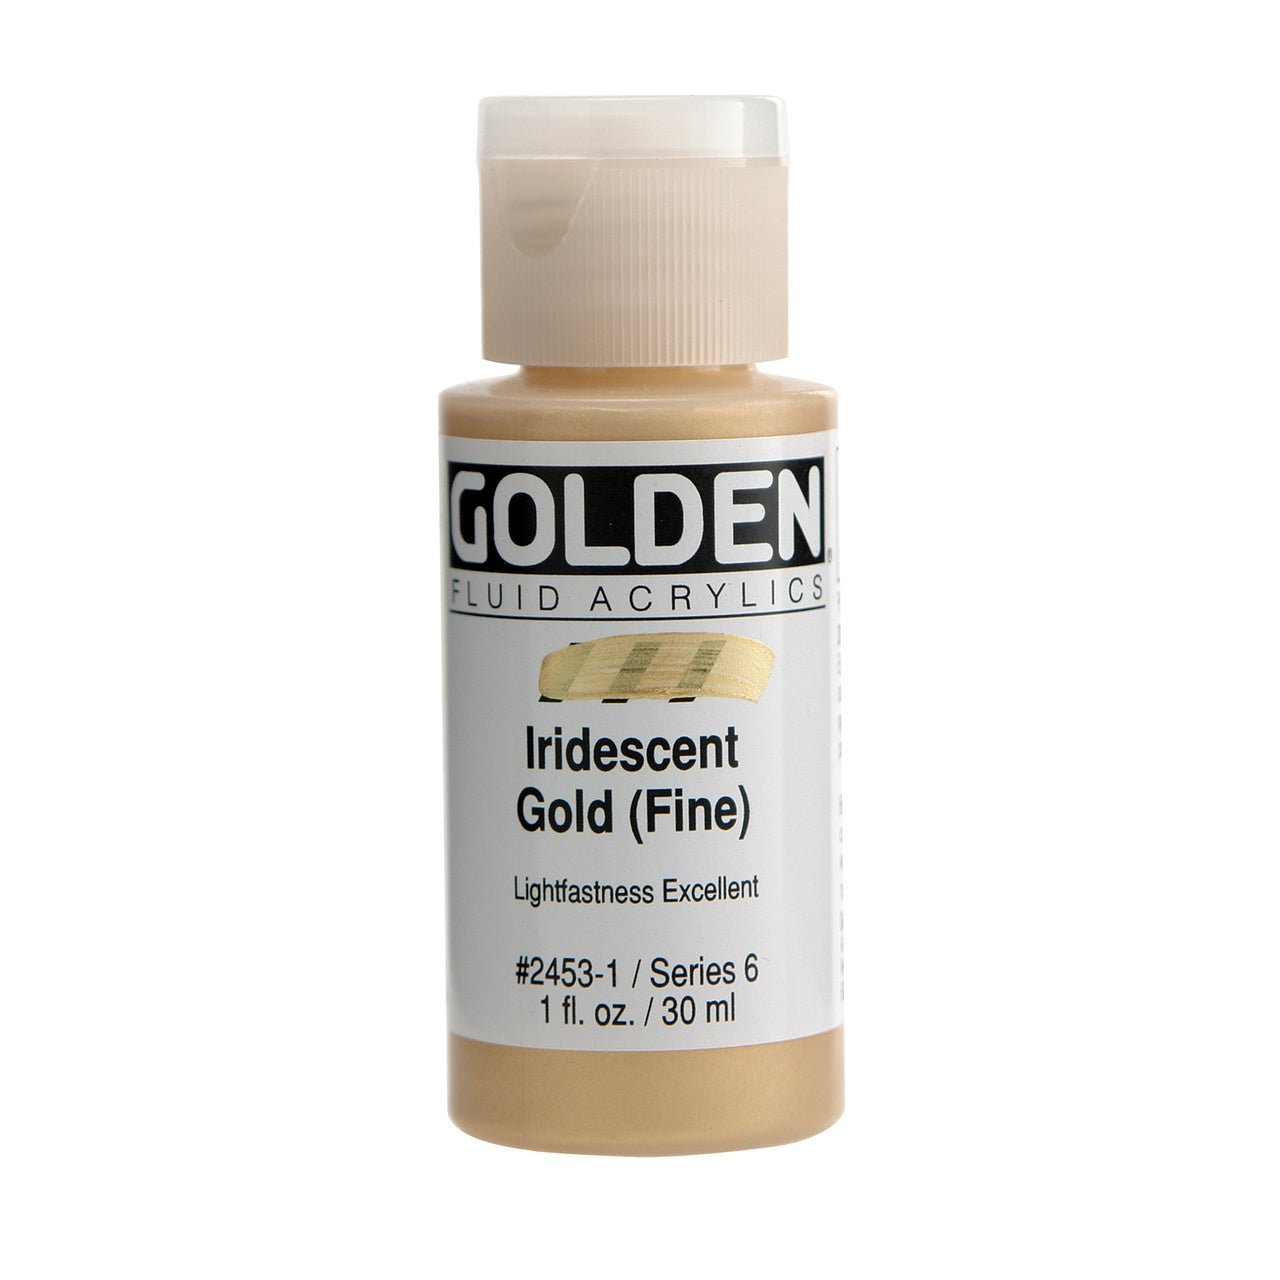 Golden Fluid Acrylic Iridescent Gold (fine) 1 oz - merriartist.com